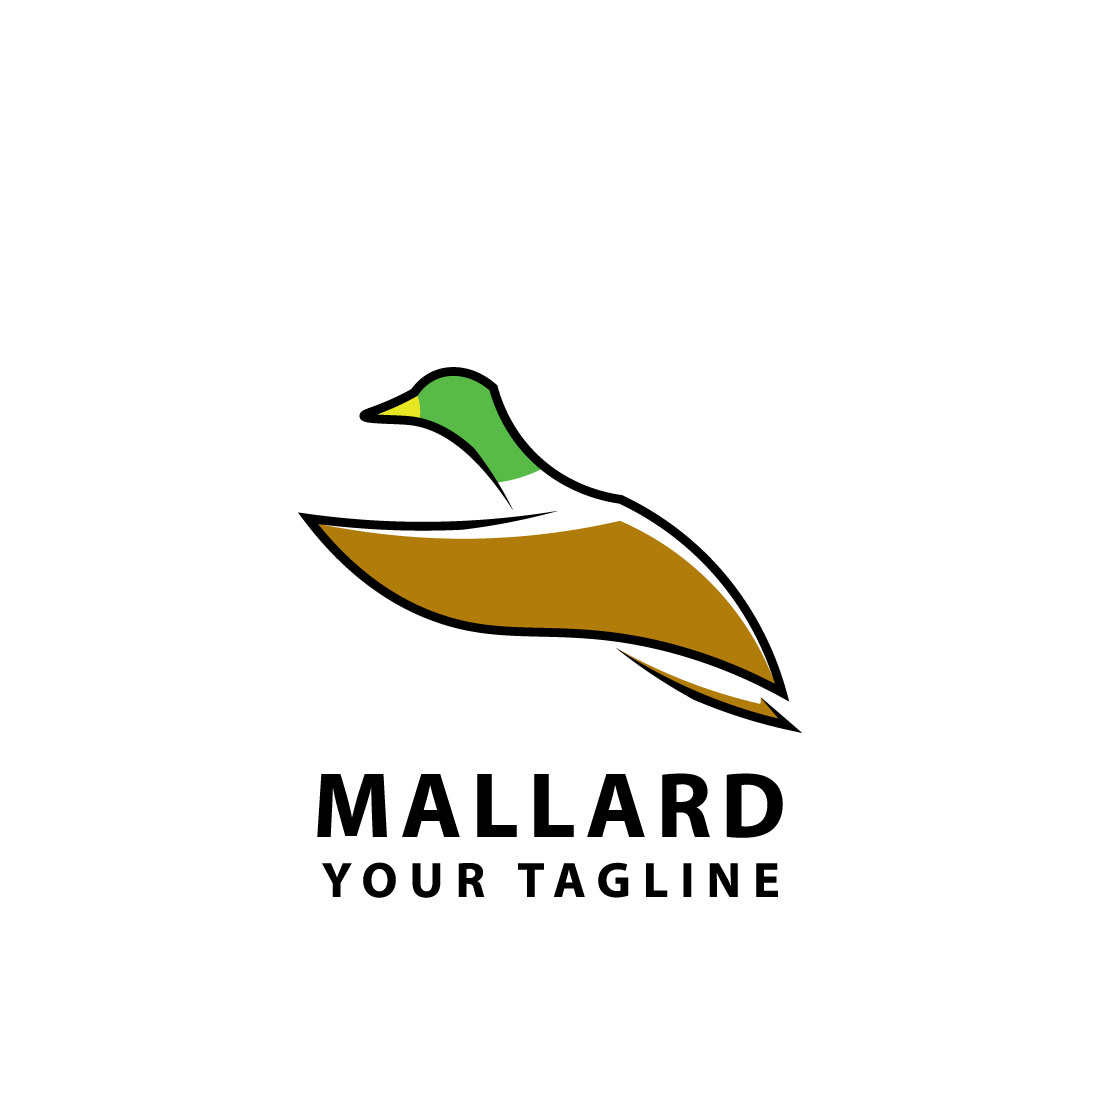 Mallard Abstract Logo cover image.